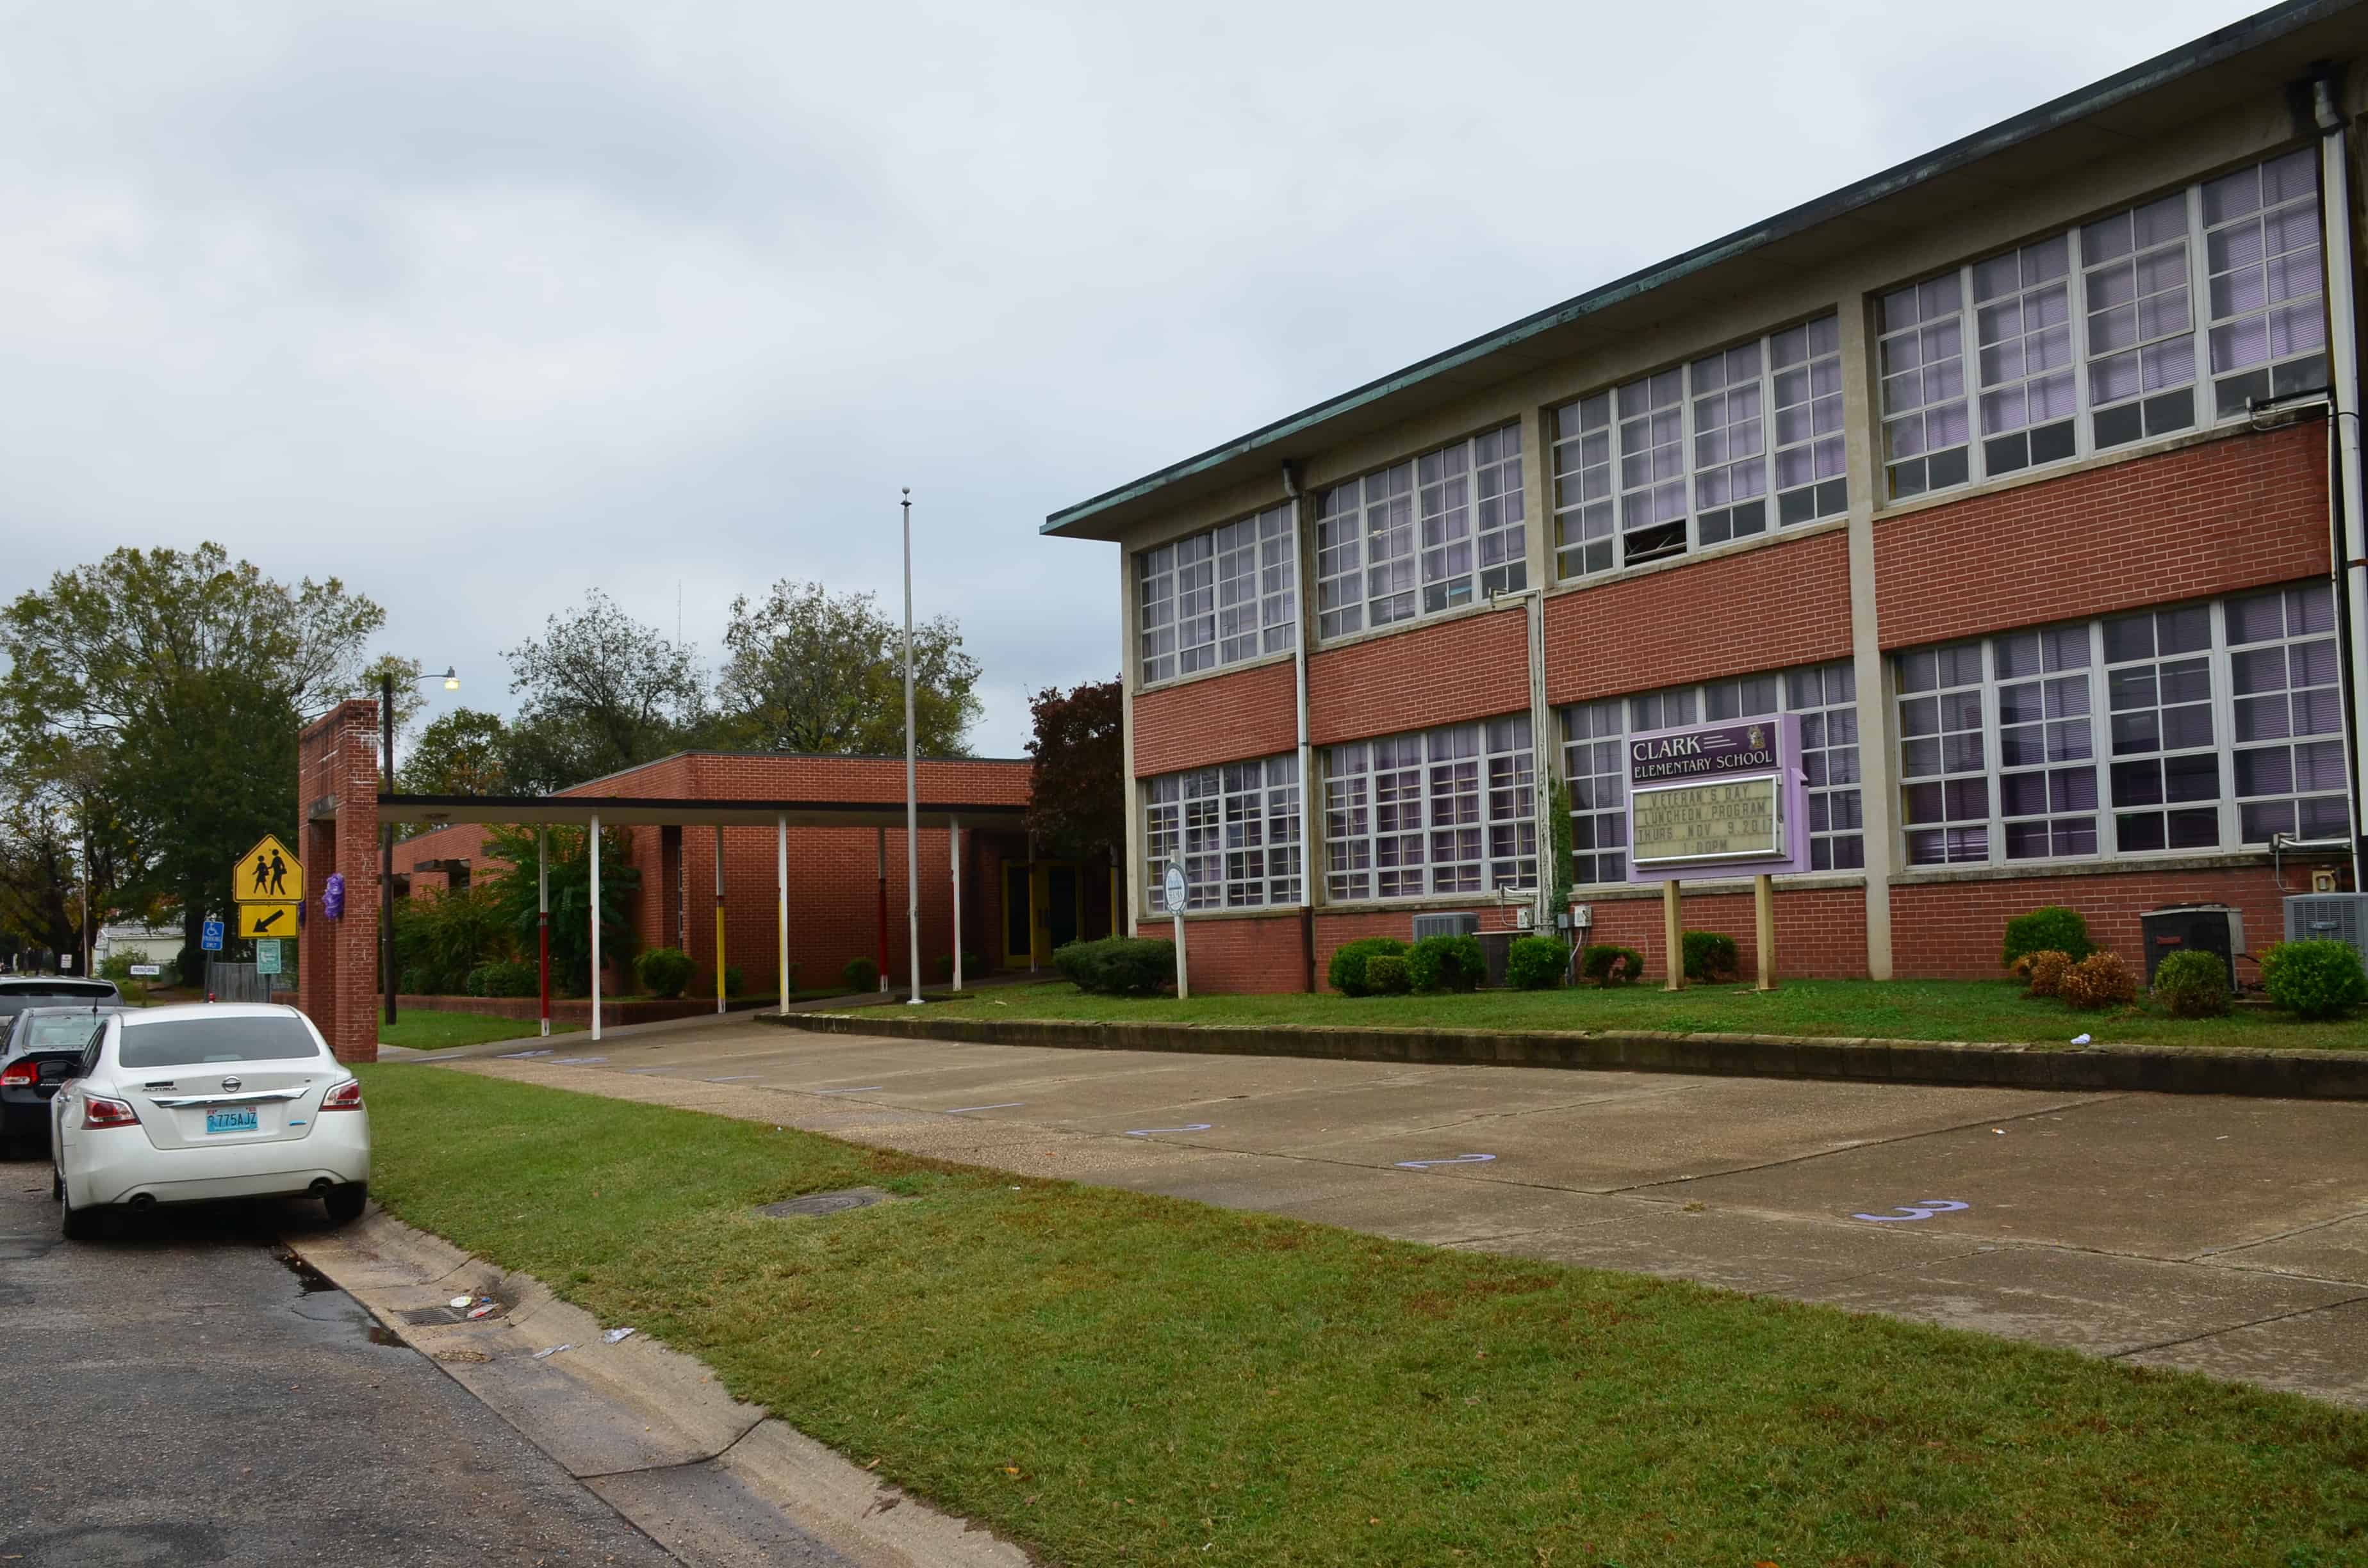 Clark Elementary School in Selma, Alabama